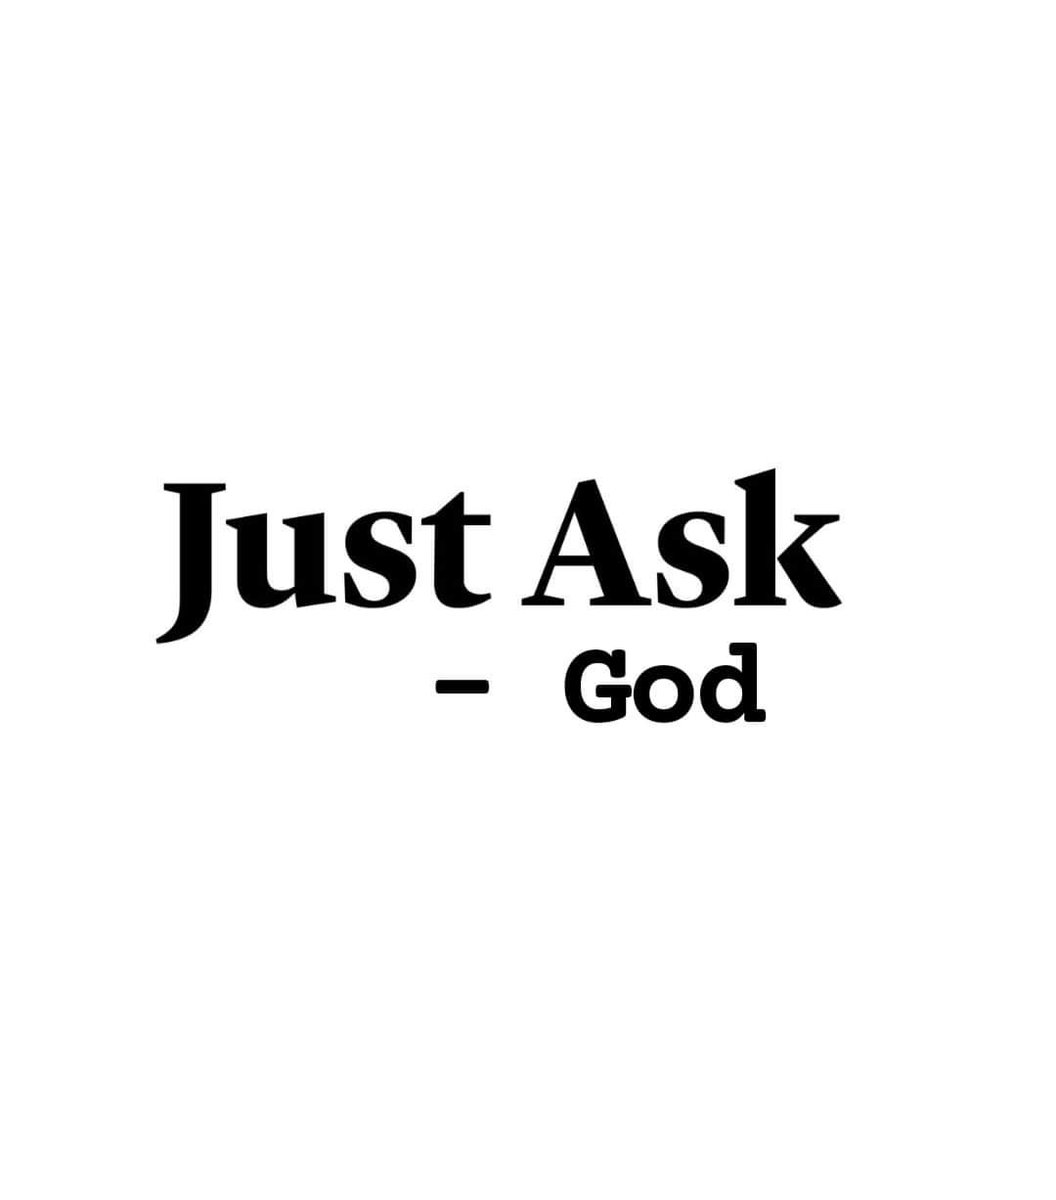 God hears prayer 
God answers prayer 
If you ask anything in My name, I will do it - John 14:13
#God #Christ #GodHearsPray #GodAnswersPrayer